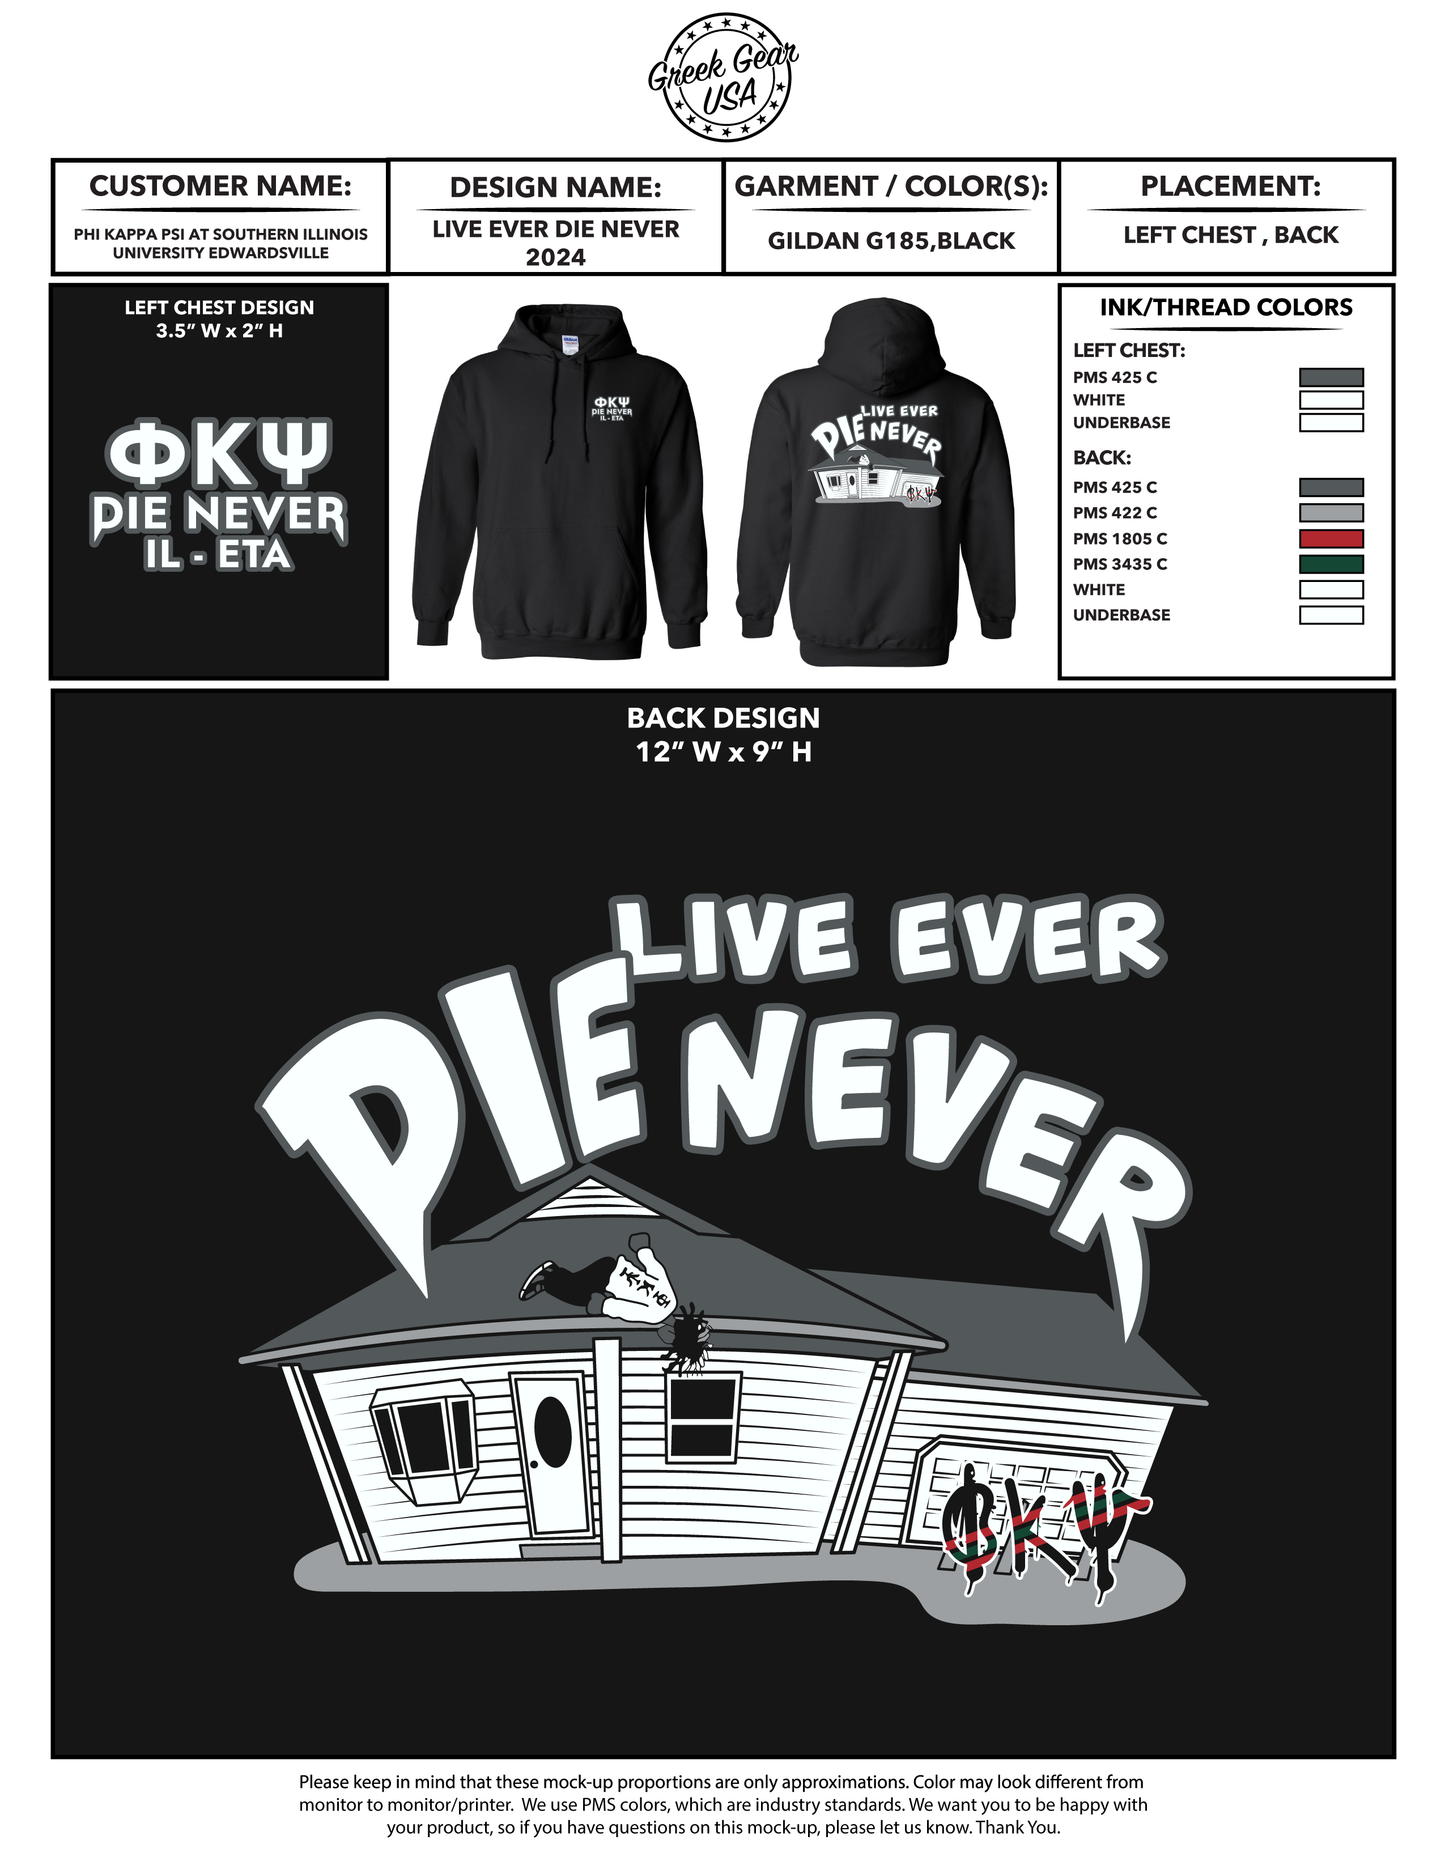 Phi Kappa Psi Southern Illinois University Edwardsville "Live Ever Die Never" Apparel 2024